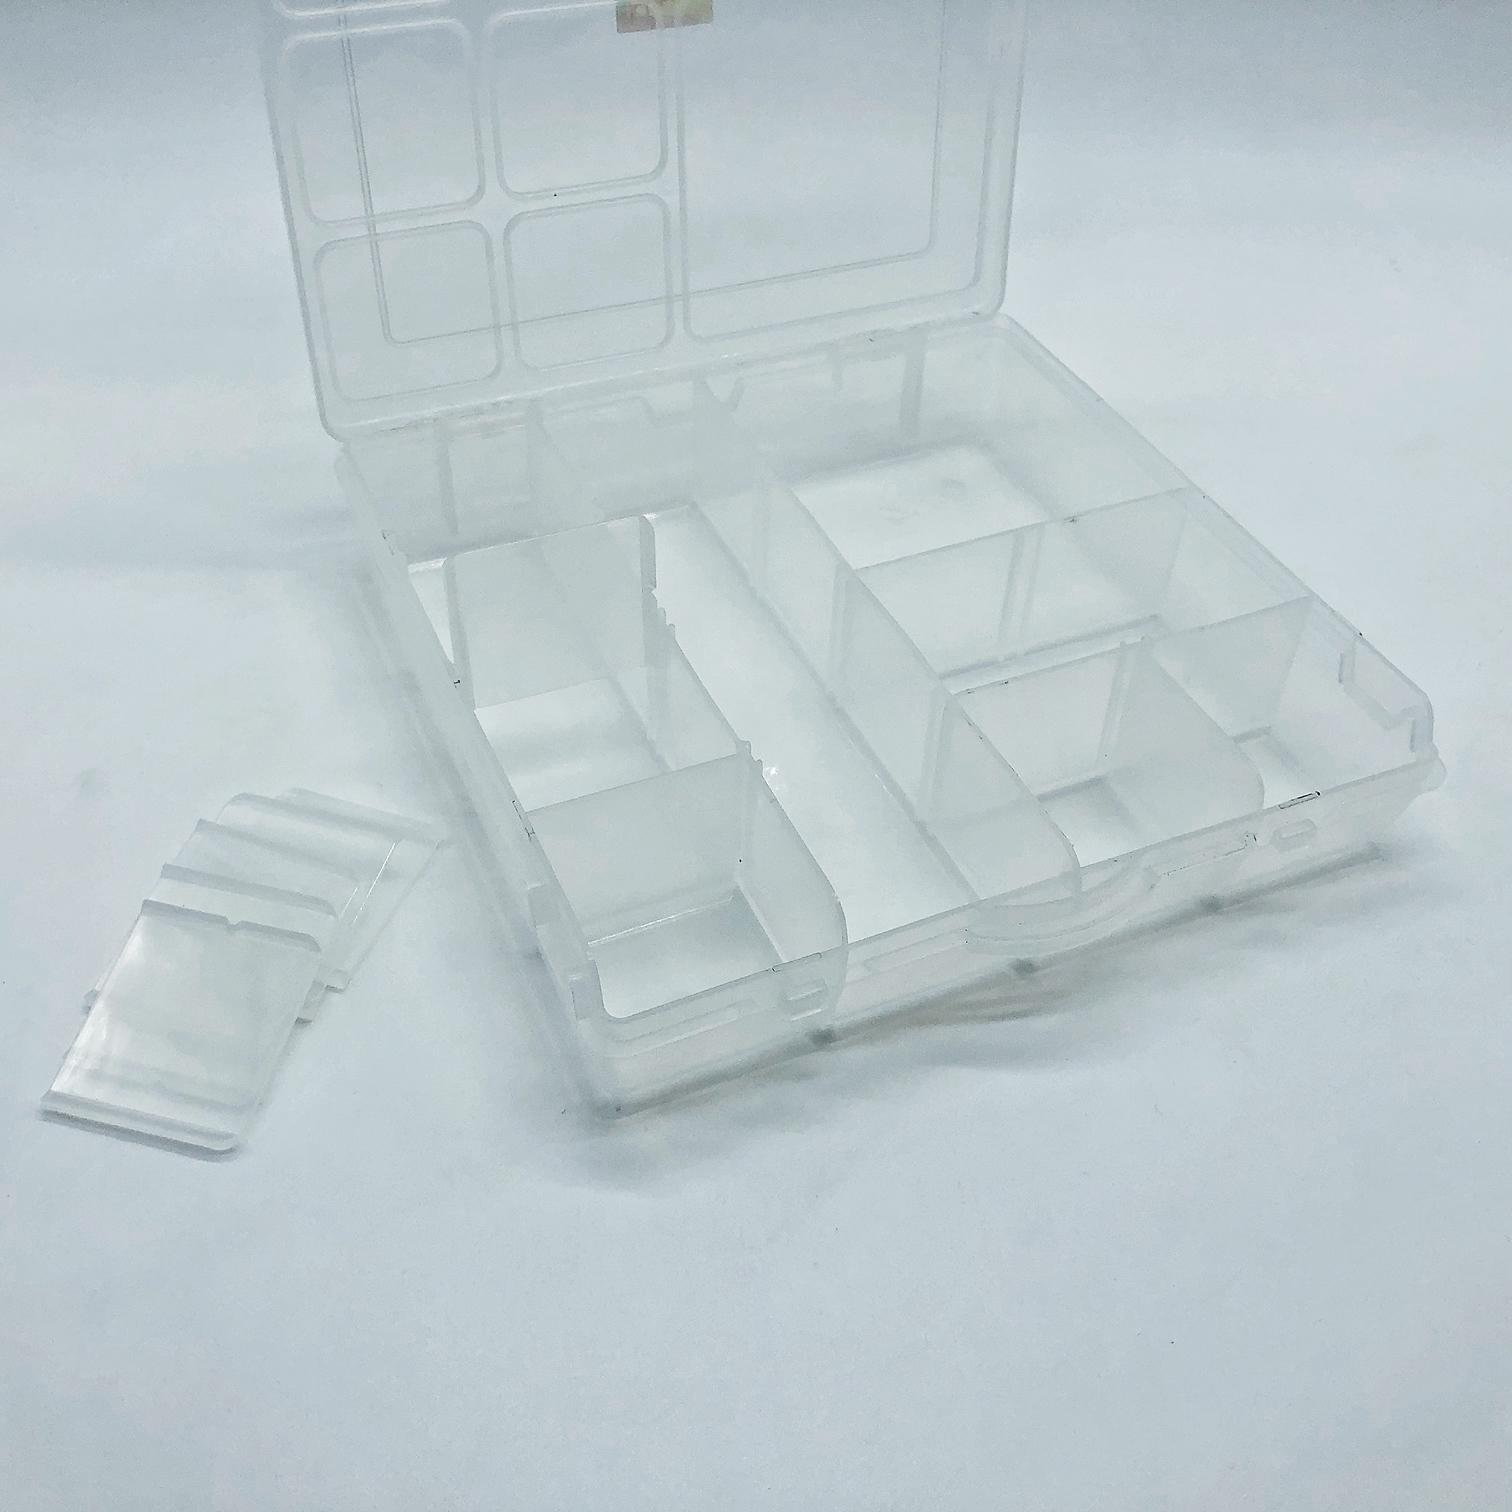 Multipurpose storage organizer box for Lego